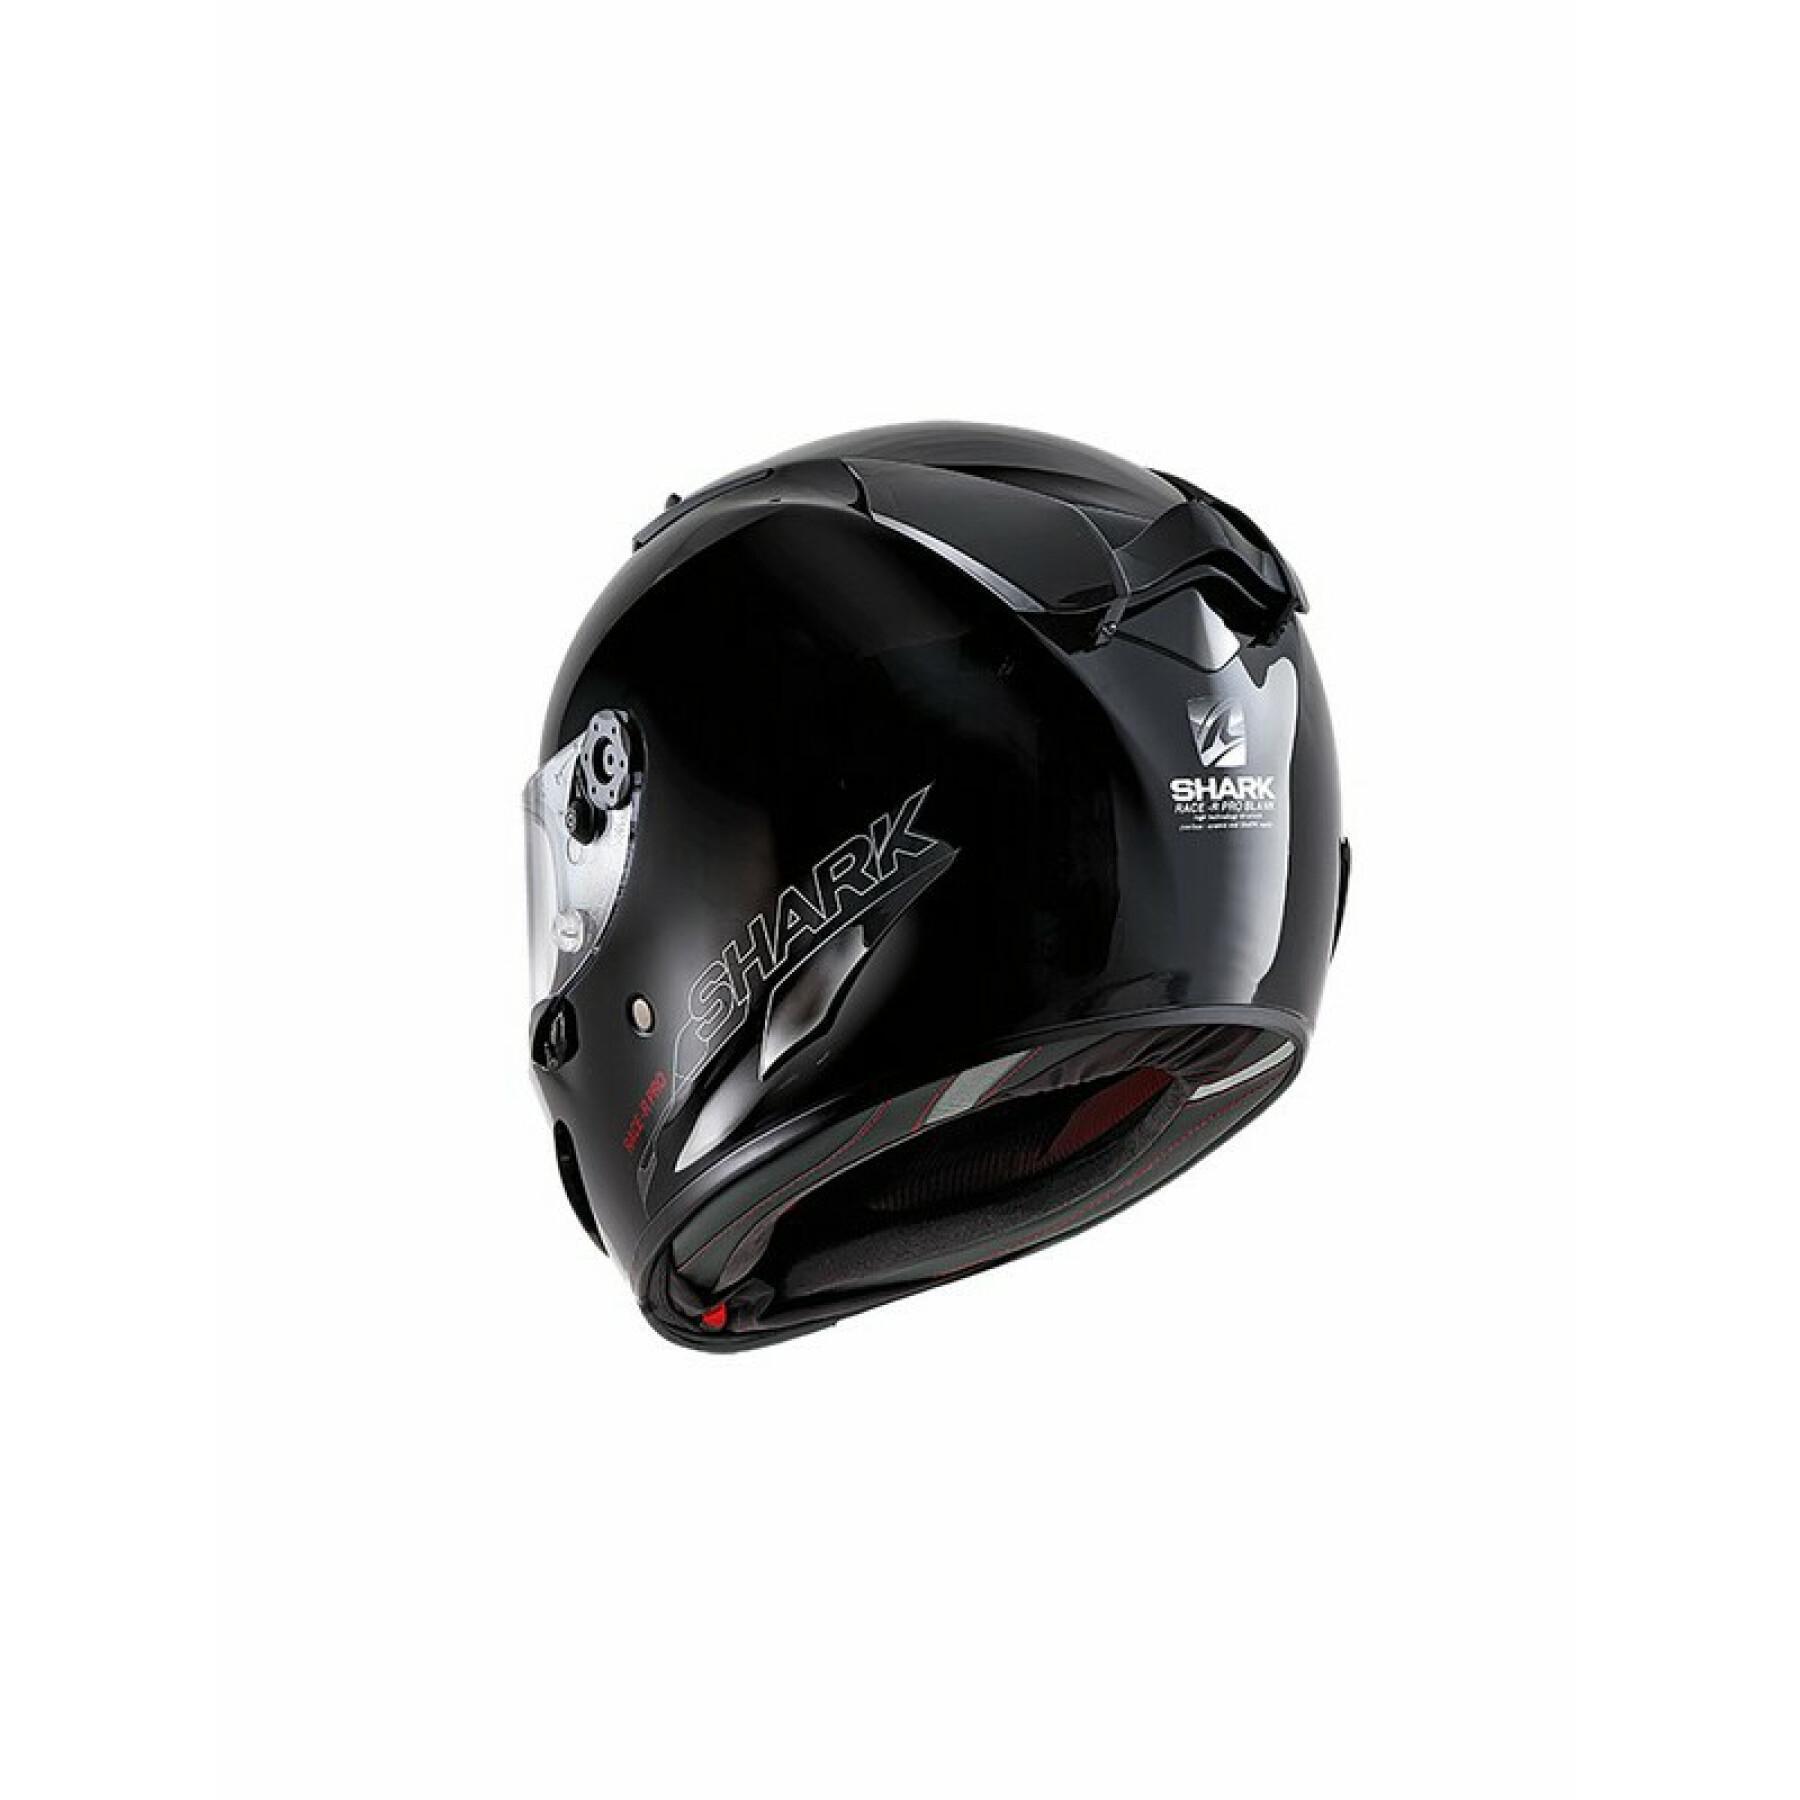 Full face motorcycle helmet Shark race-r pro blank